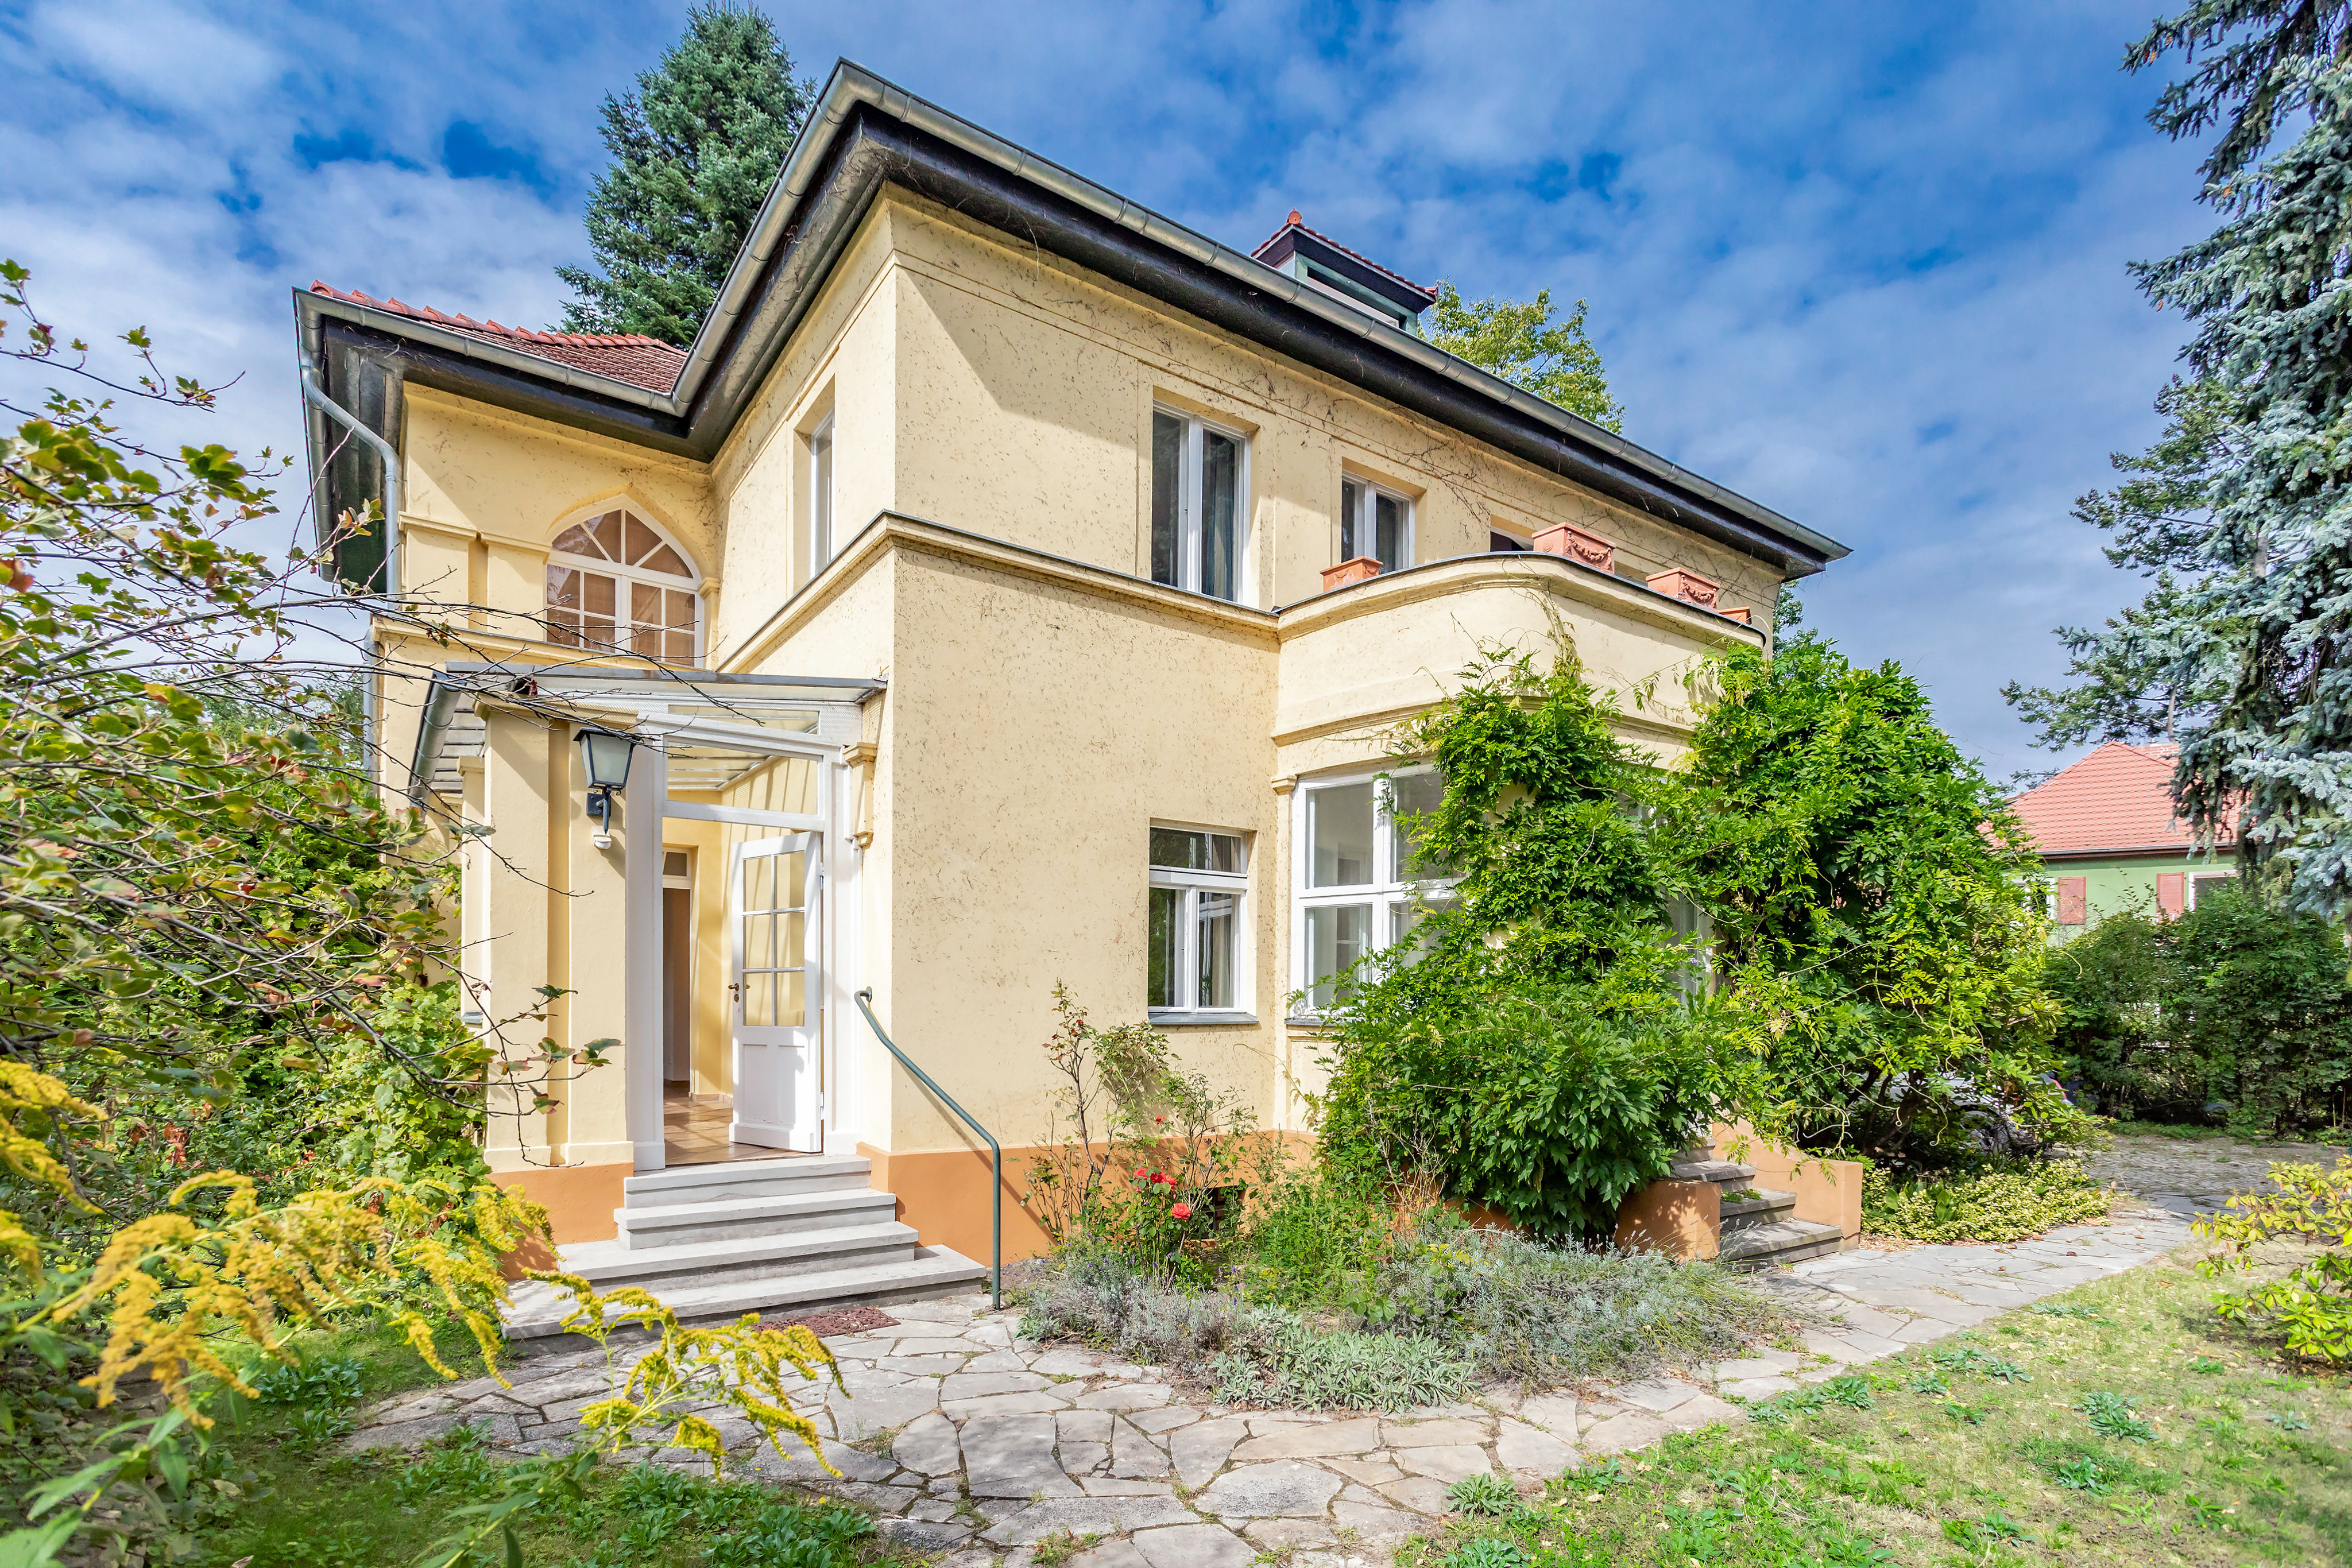 16 Potsdam Babelsberg Exklusive Villa In Feiner Lage